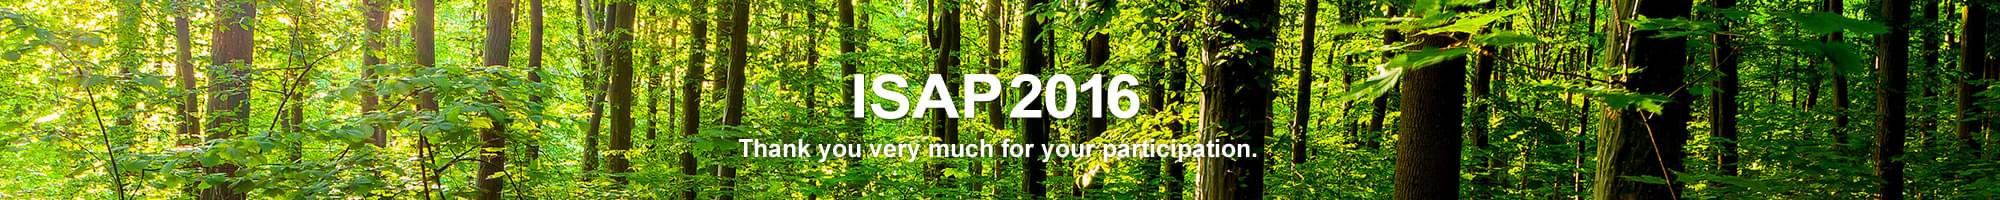 ISAP2016 Programme